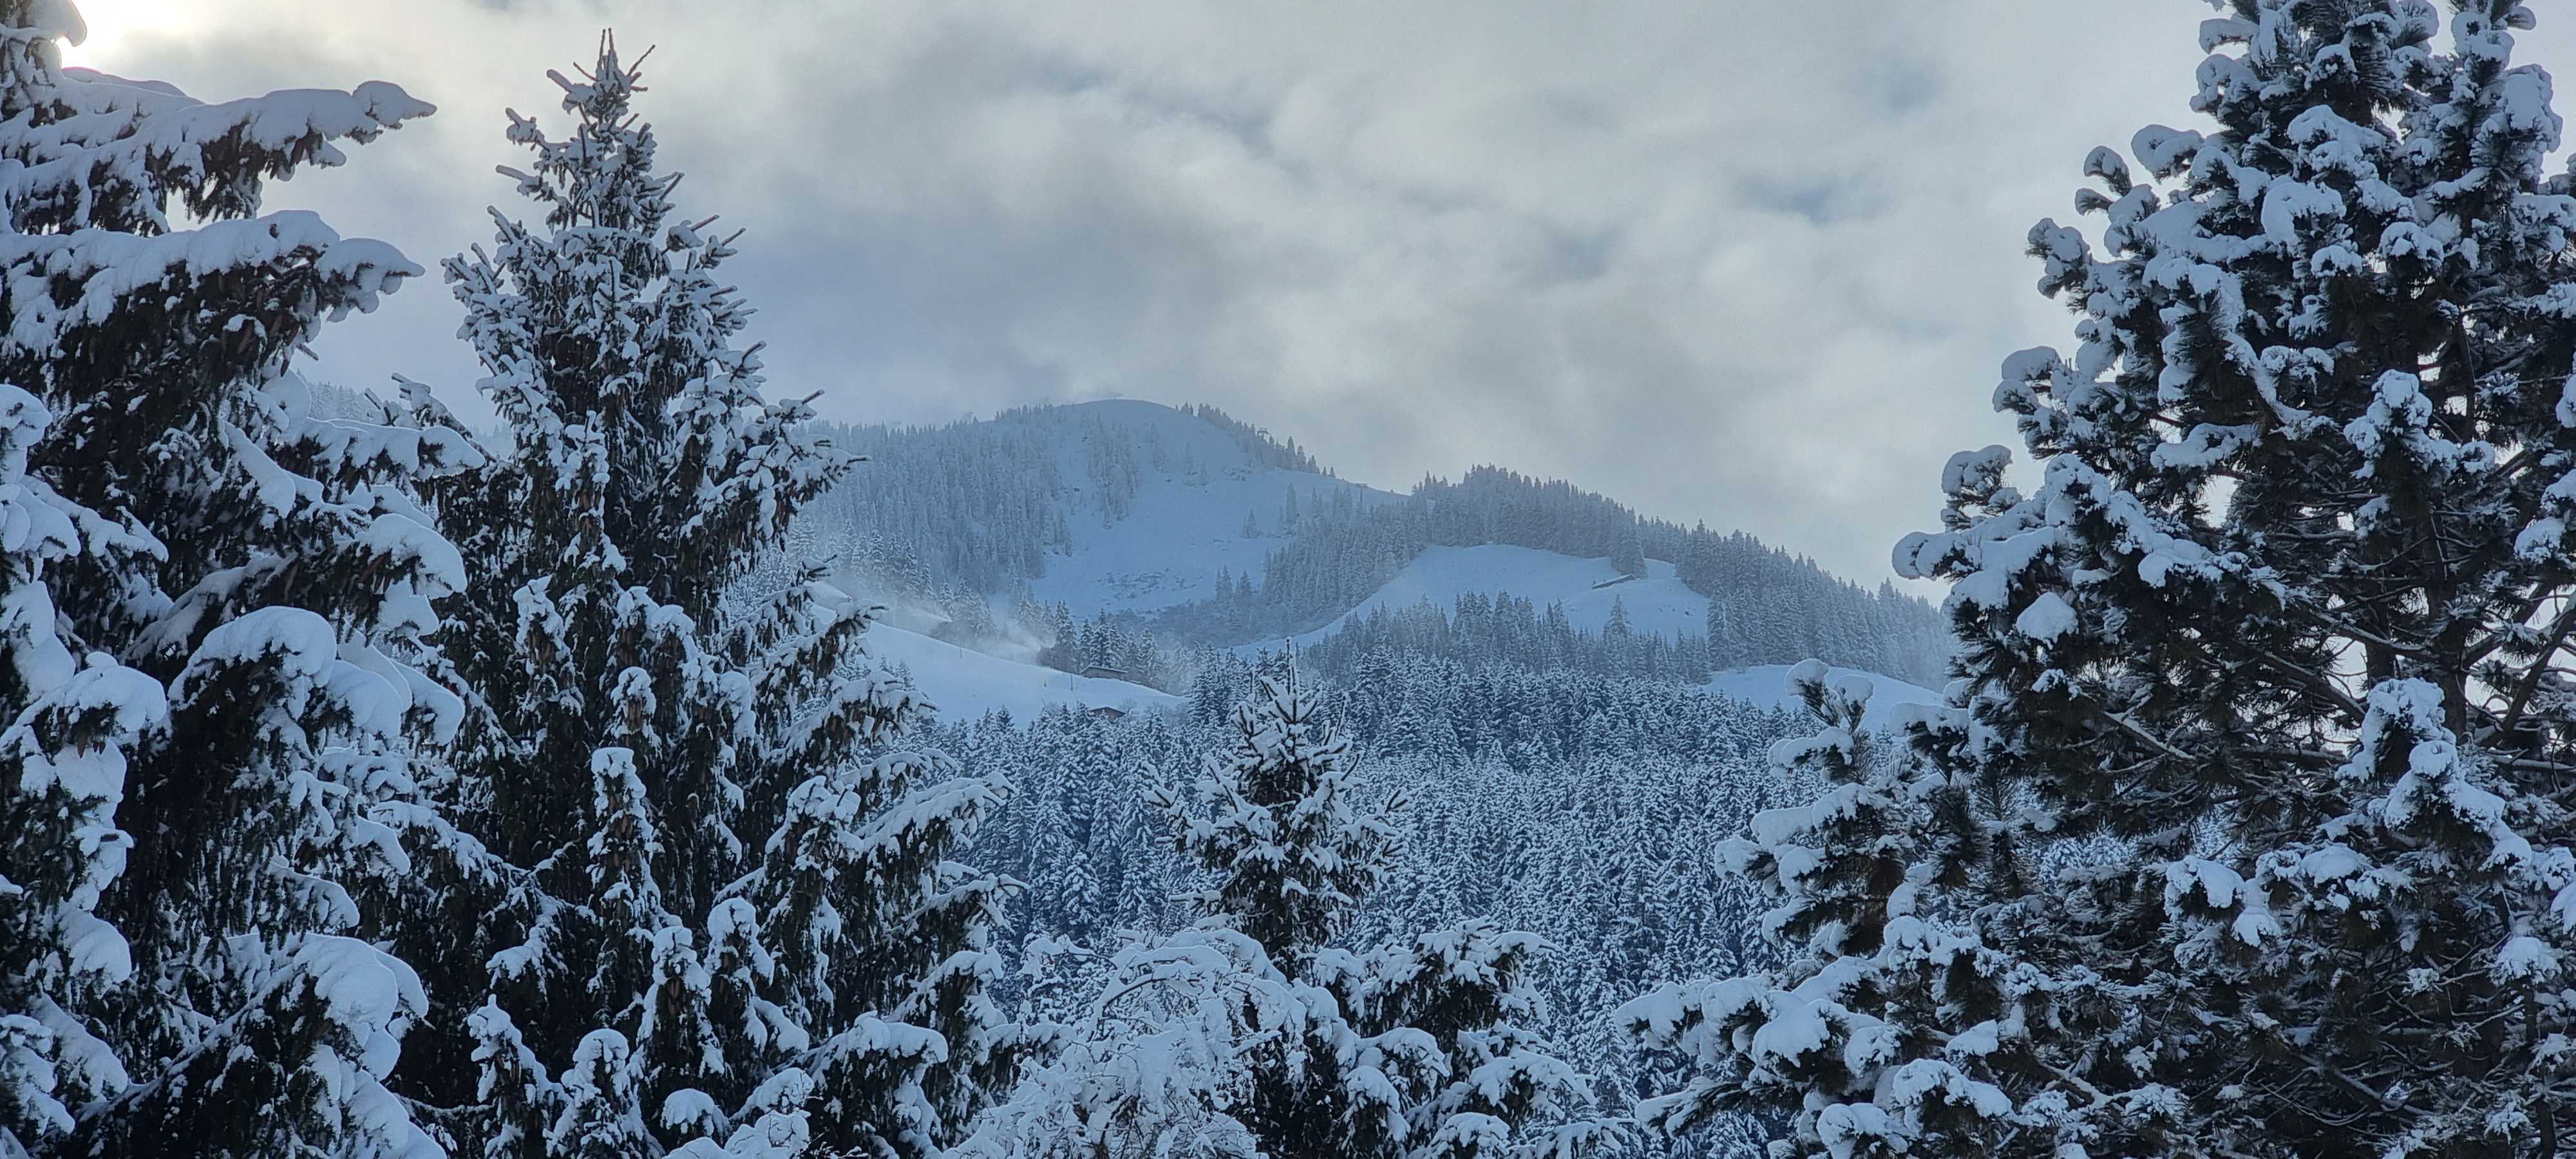 Sneeuw op de bomen in de Alpen. Foto: Jeroen Elferink